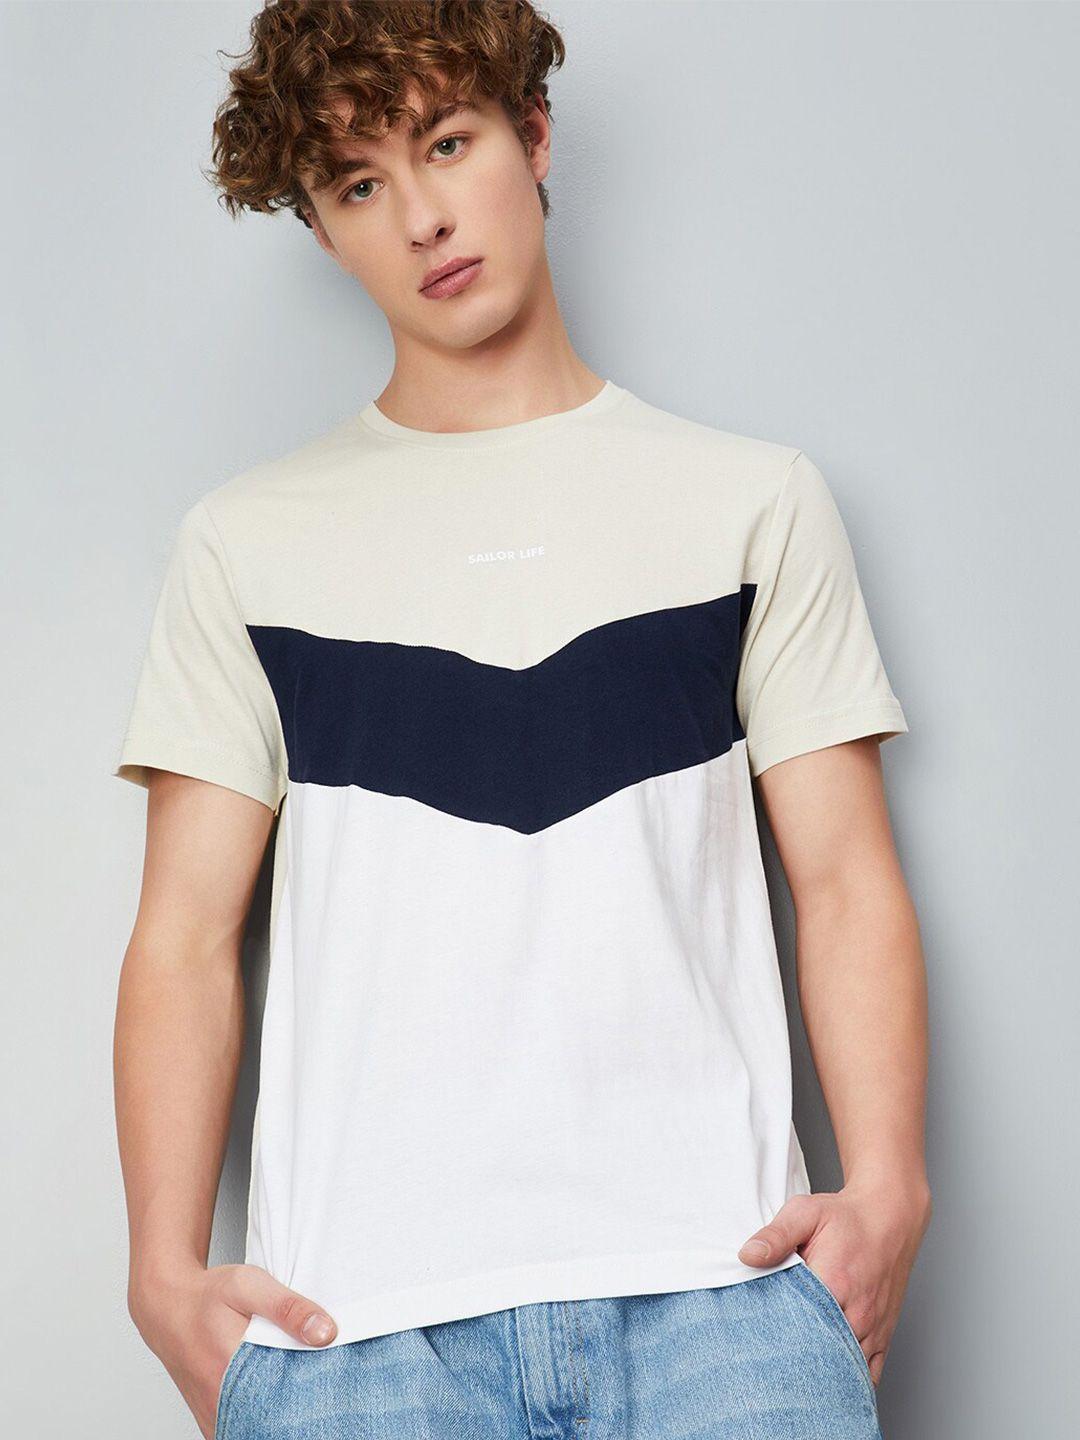 max-colourblocked-pure-cotton-t-shirt